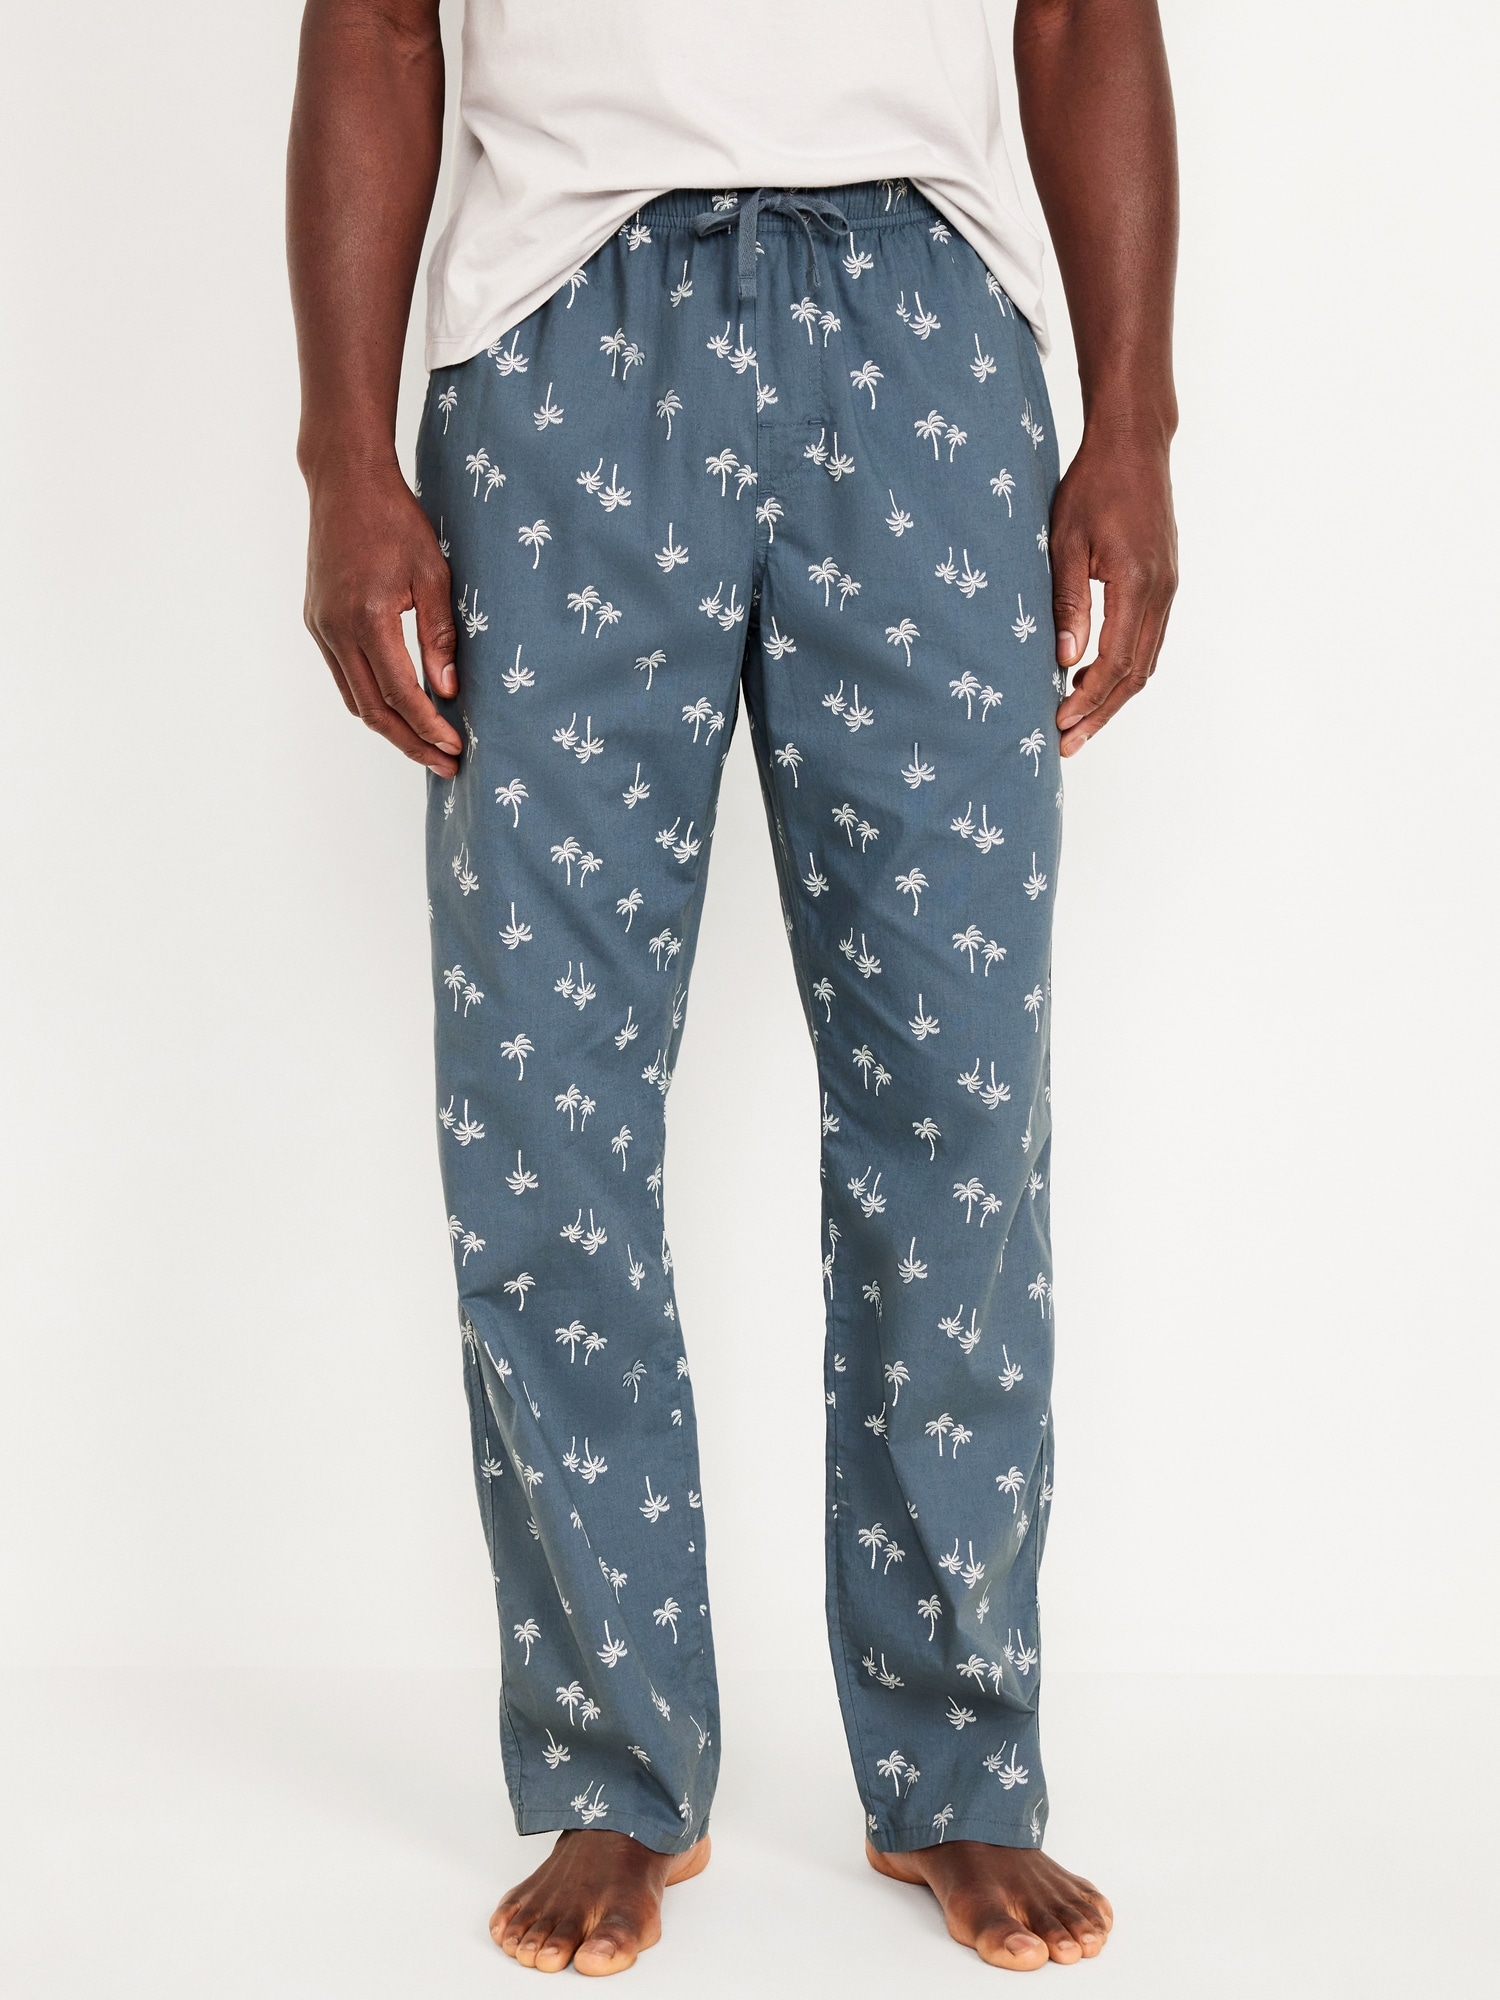 Snake Skin Pajama Pants Mens Lounge Pants Casual Men Pajama Bottoms with  Drawstring & Pockets Size S at  Men's Clothing store